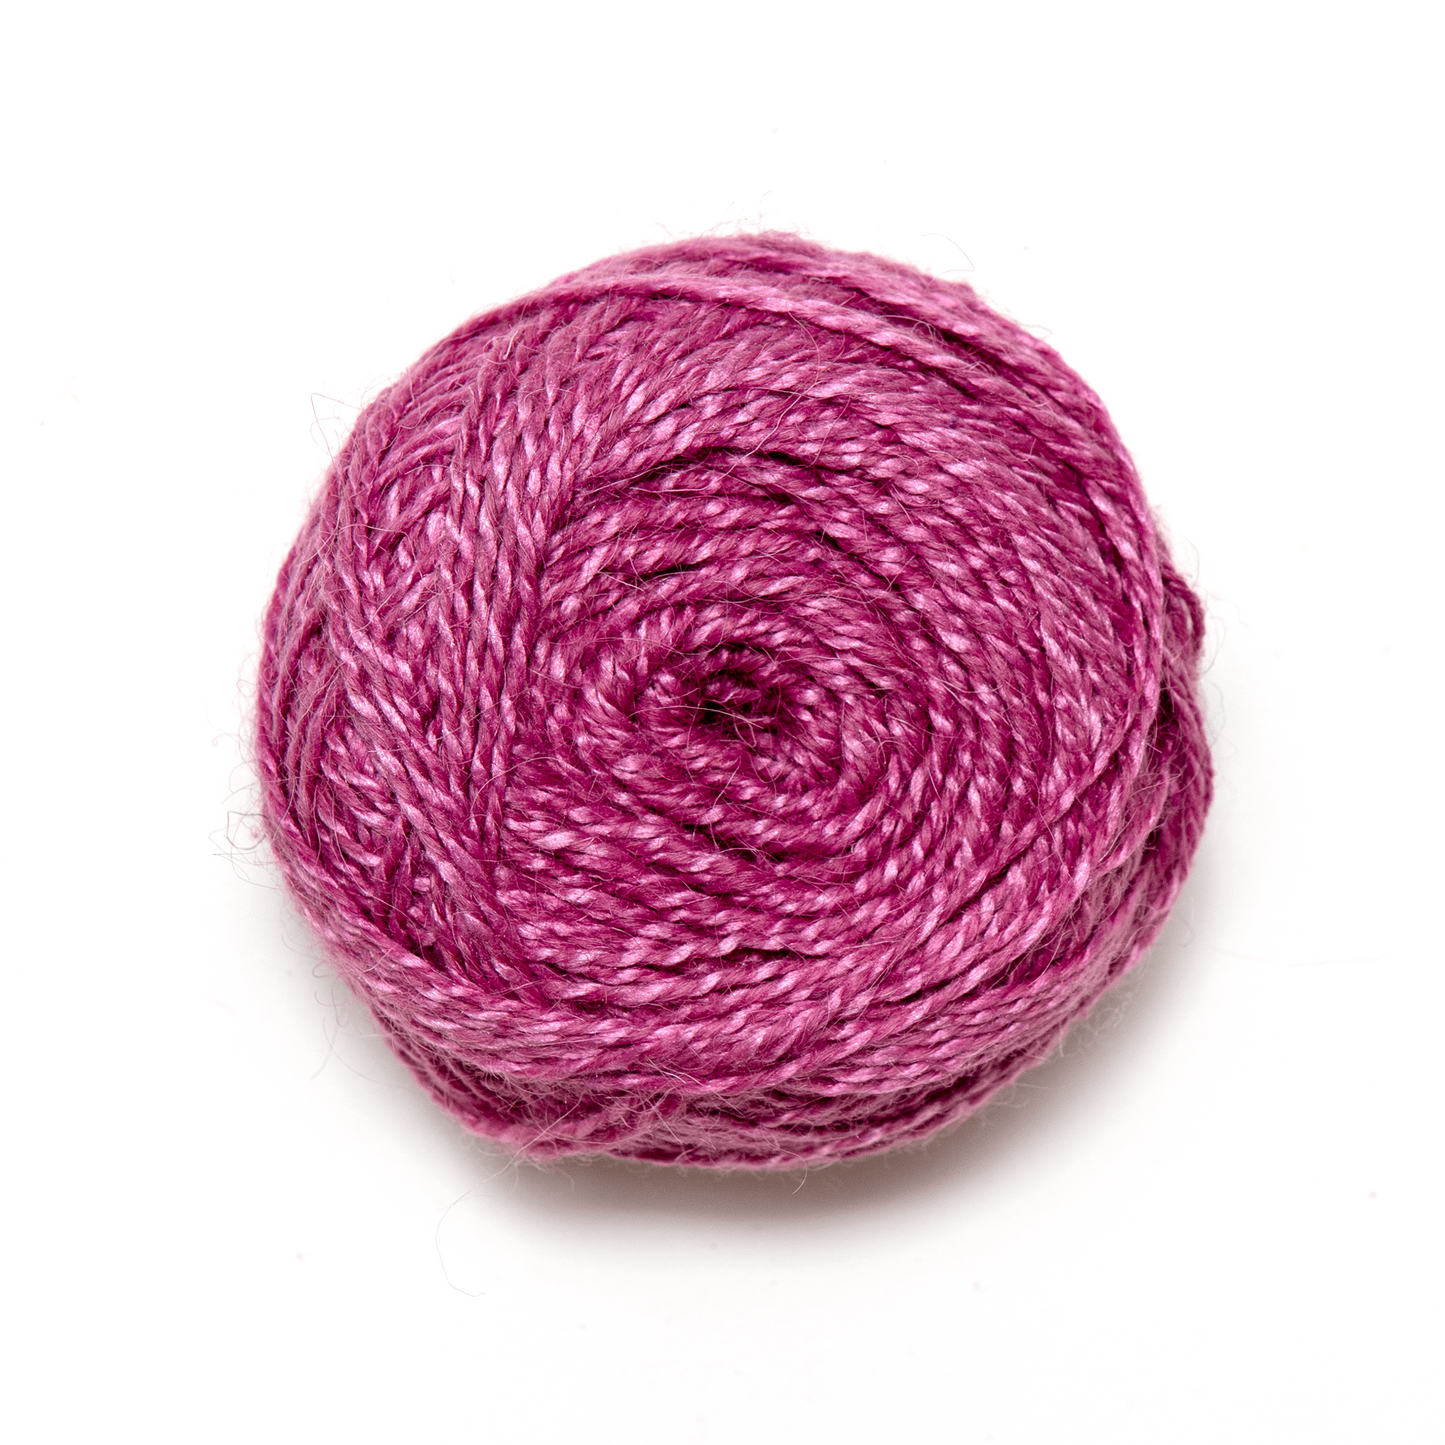 Herbal Dyed Silky Wool Plied Yarn